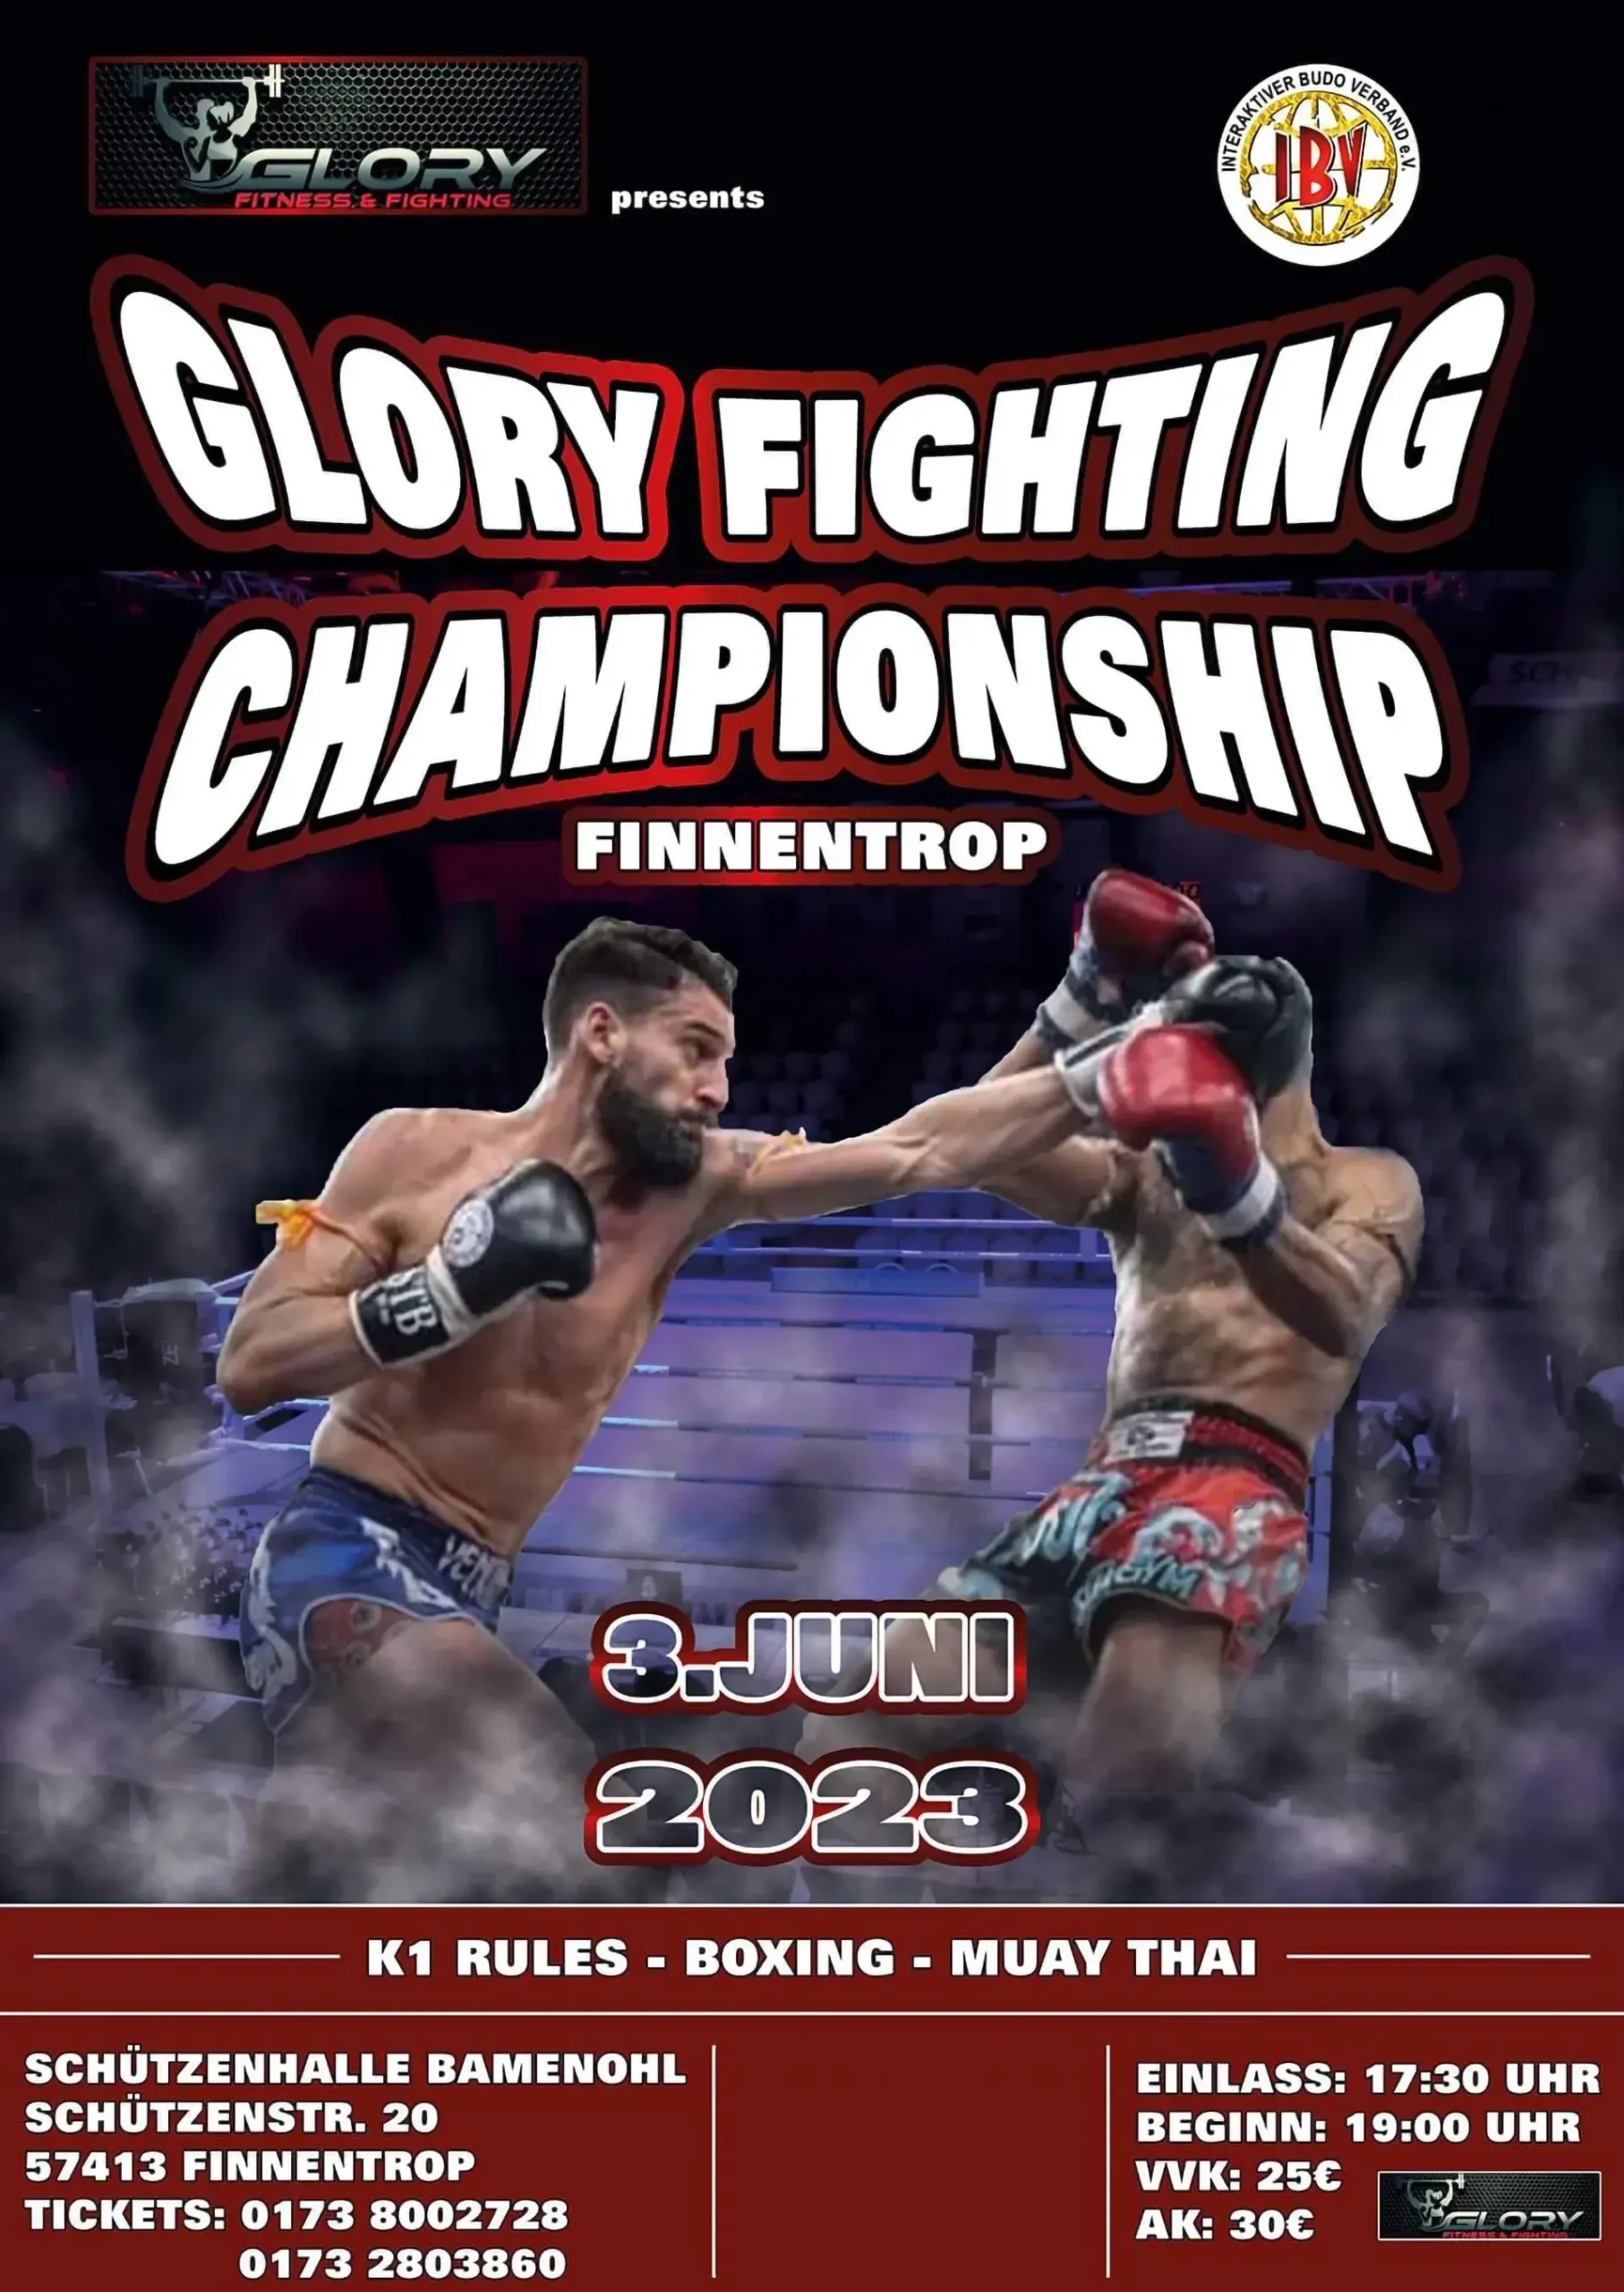 Glory Fighting Championship am 3 Juni 2023 in Finnentrop